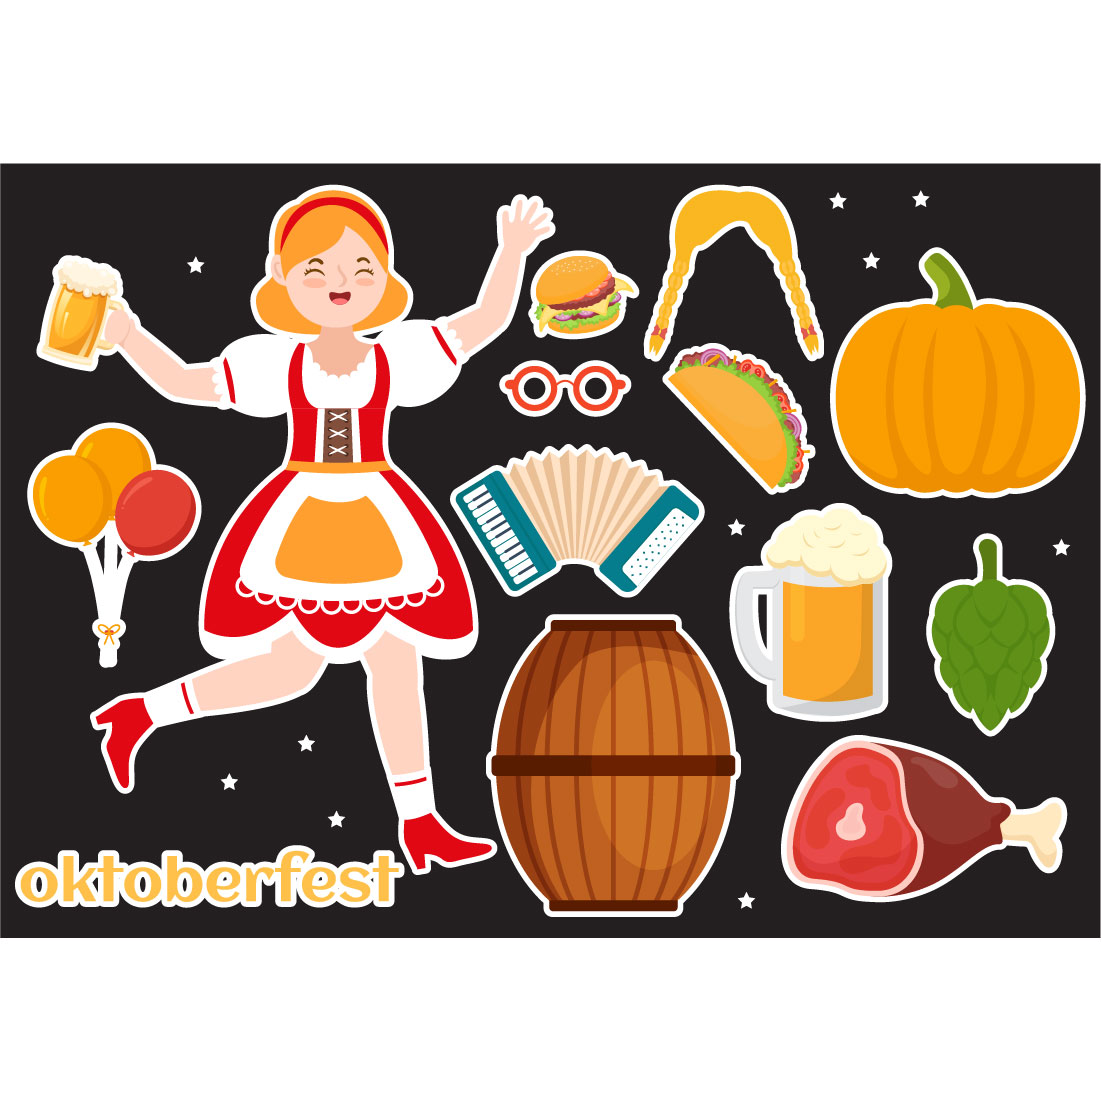 10 Happy Oktoberfest Beer Festival Elements Illustration preview image.